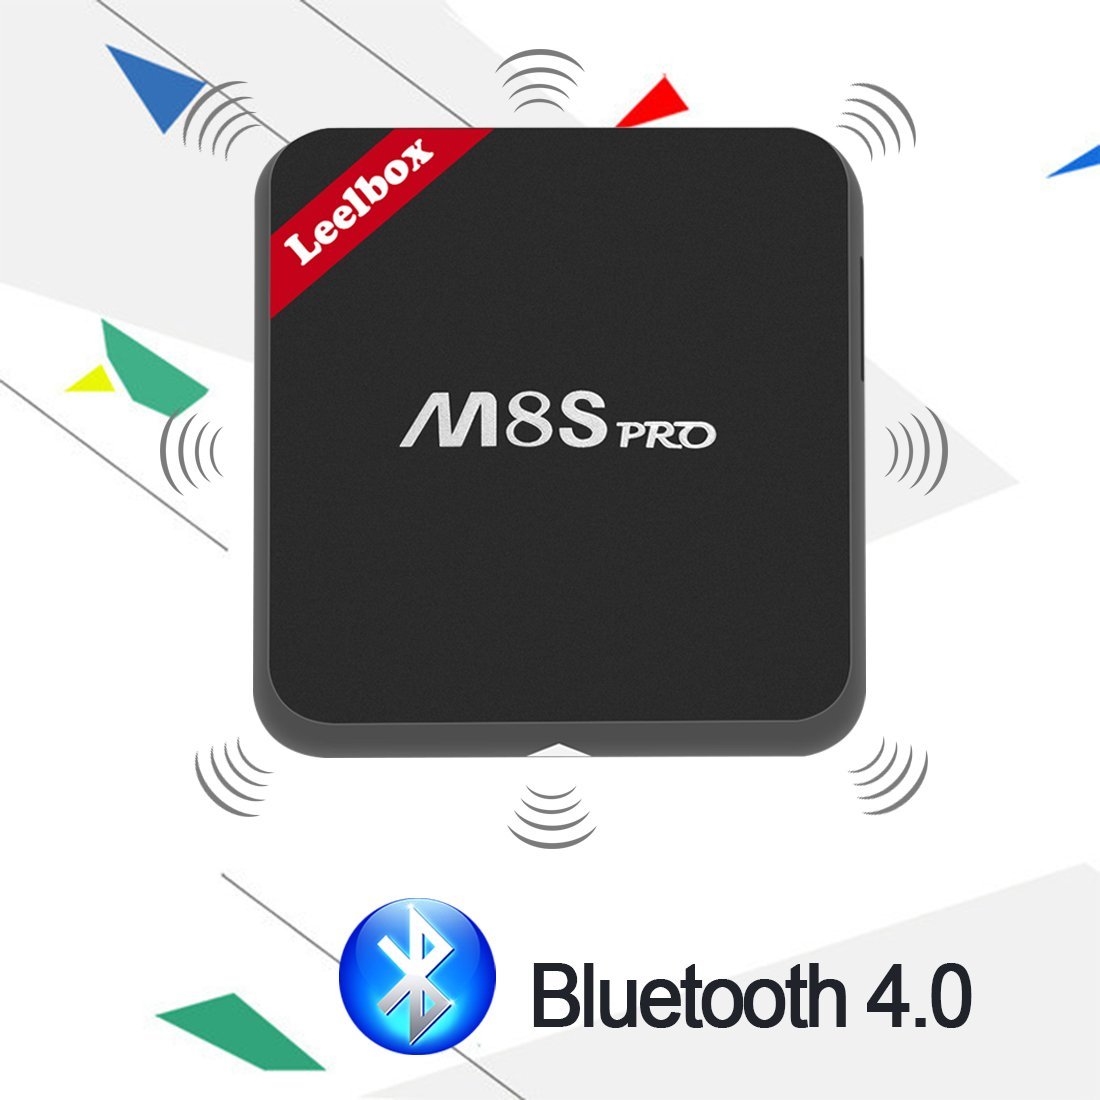 FREE -  LeelBox M8S Pro 2017 Android TV Box